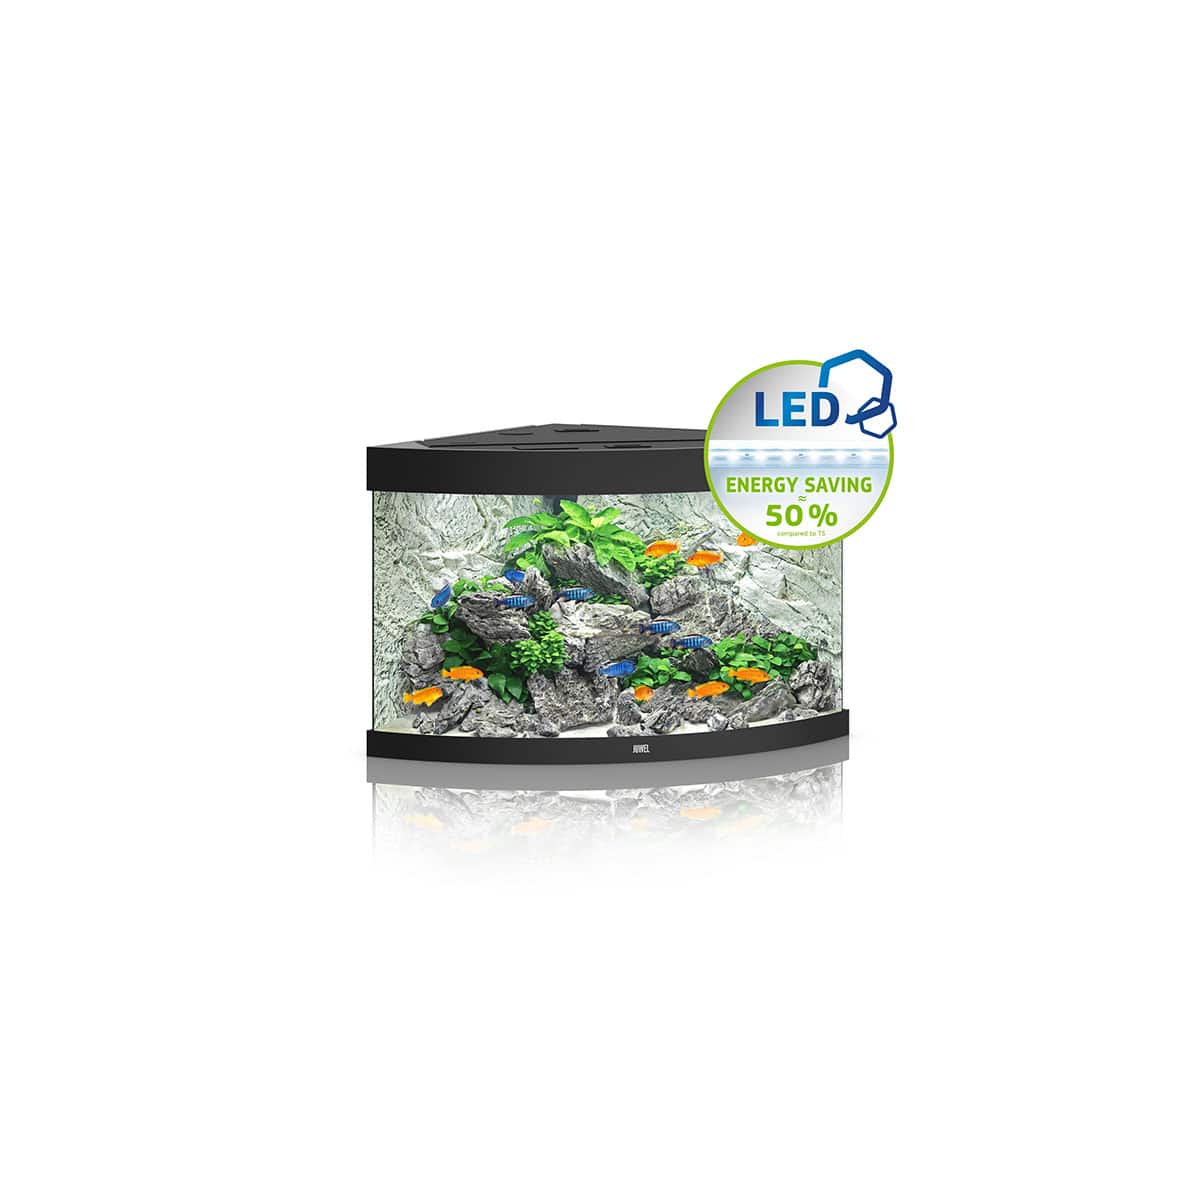 Juwel Komplett Eck-Aquarium Trigon 190 LED ohne Unterschrank schwarz